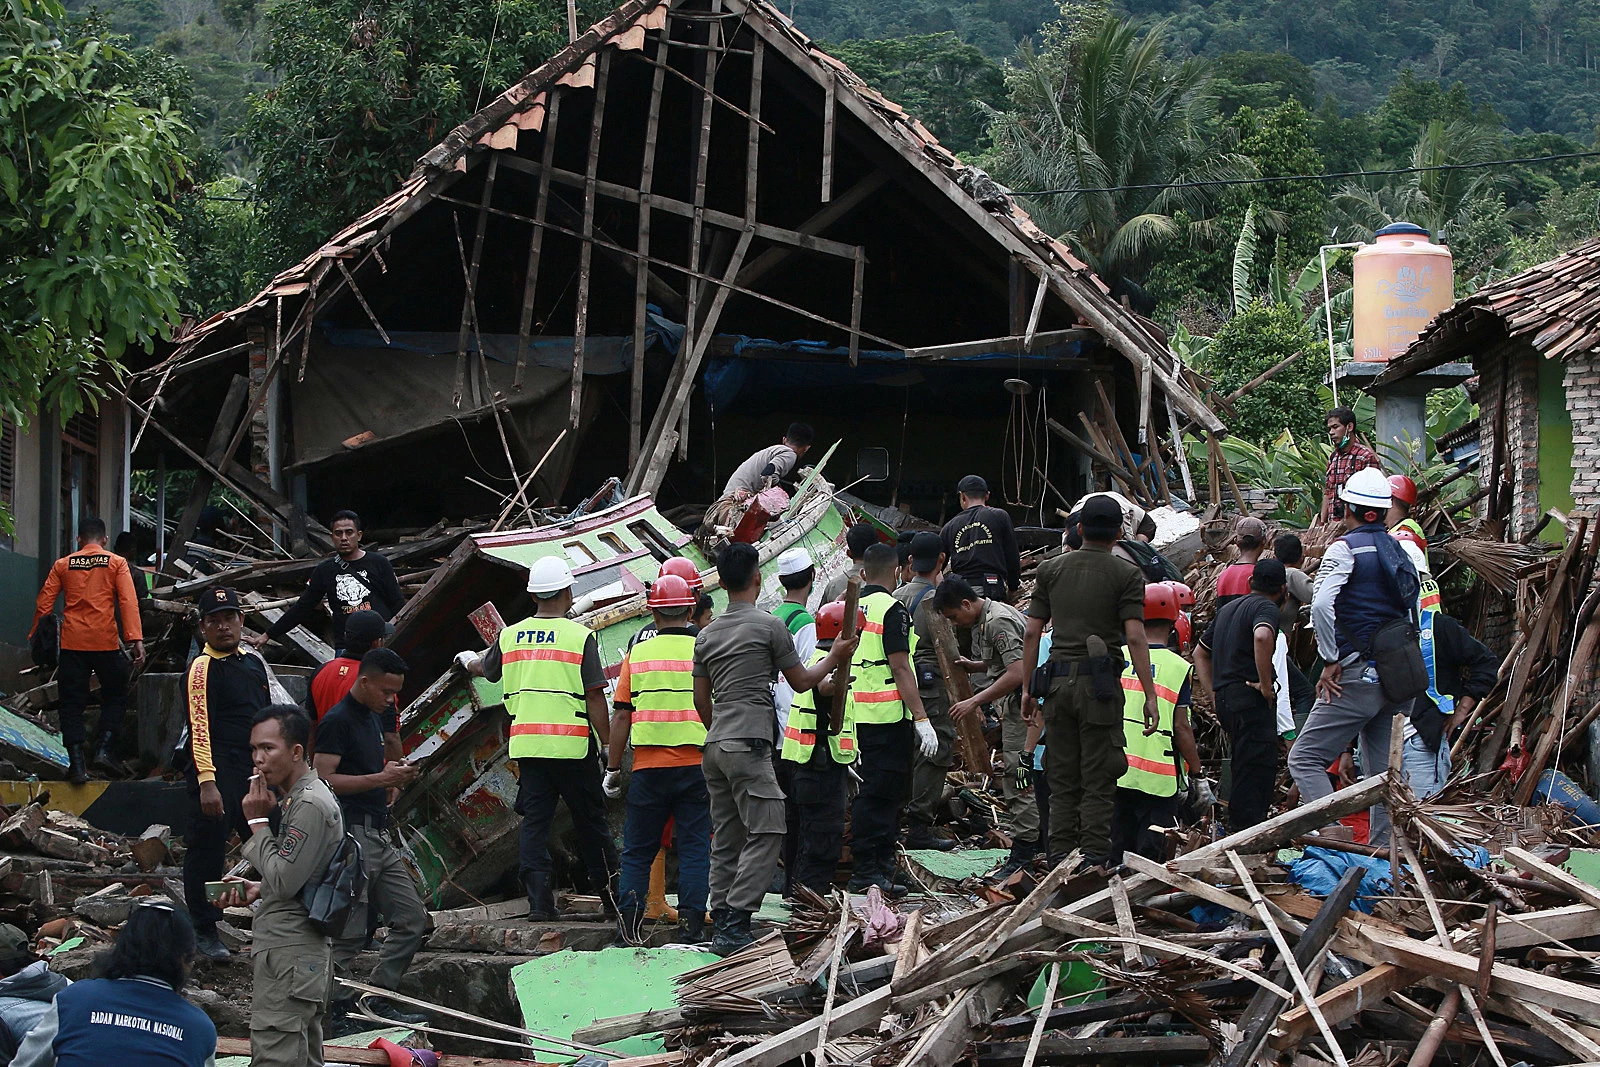 https://townsquare.media/site/295/files/2011/08/Indonesian-Tsunami-Ferdi-Awed.jpg